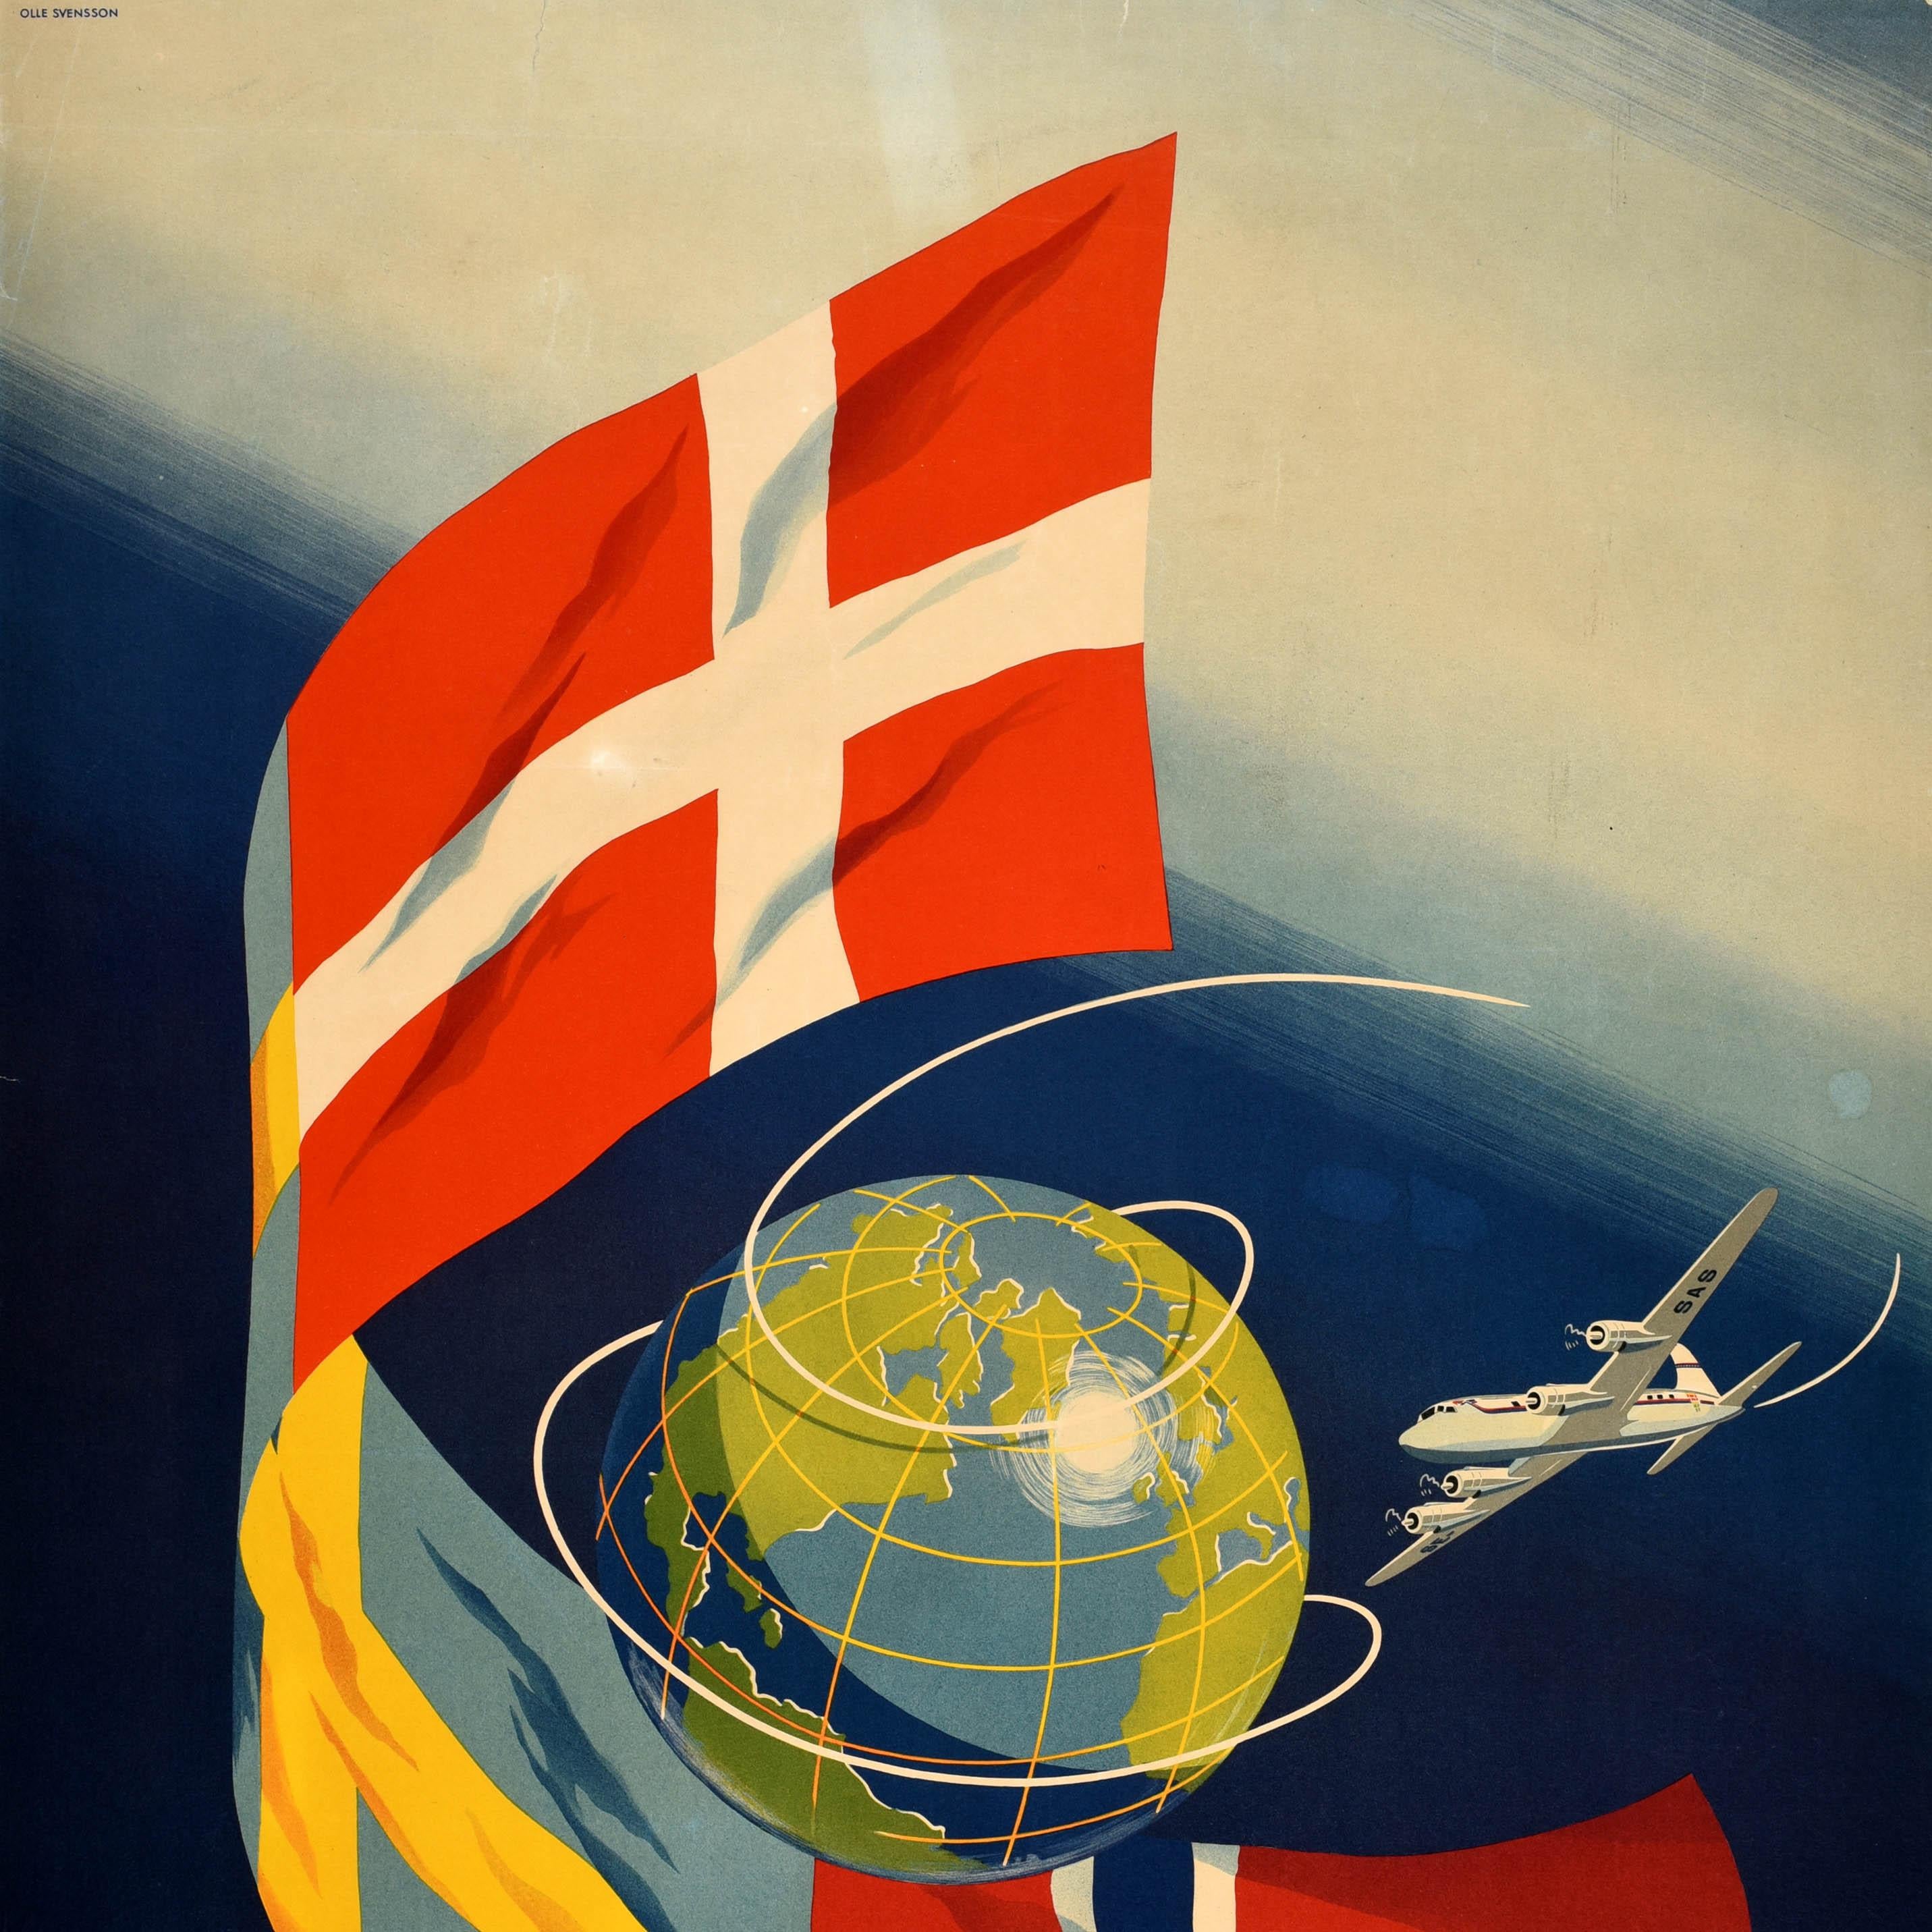 Original Vintage Travel Poster SAS Scandinavian Airlines System Olle Svensson - Black Print by Unknown